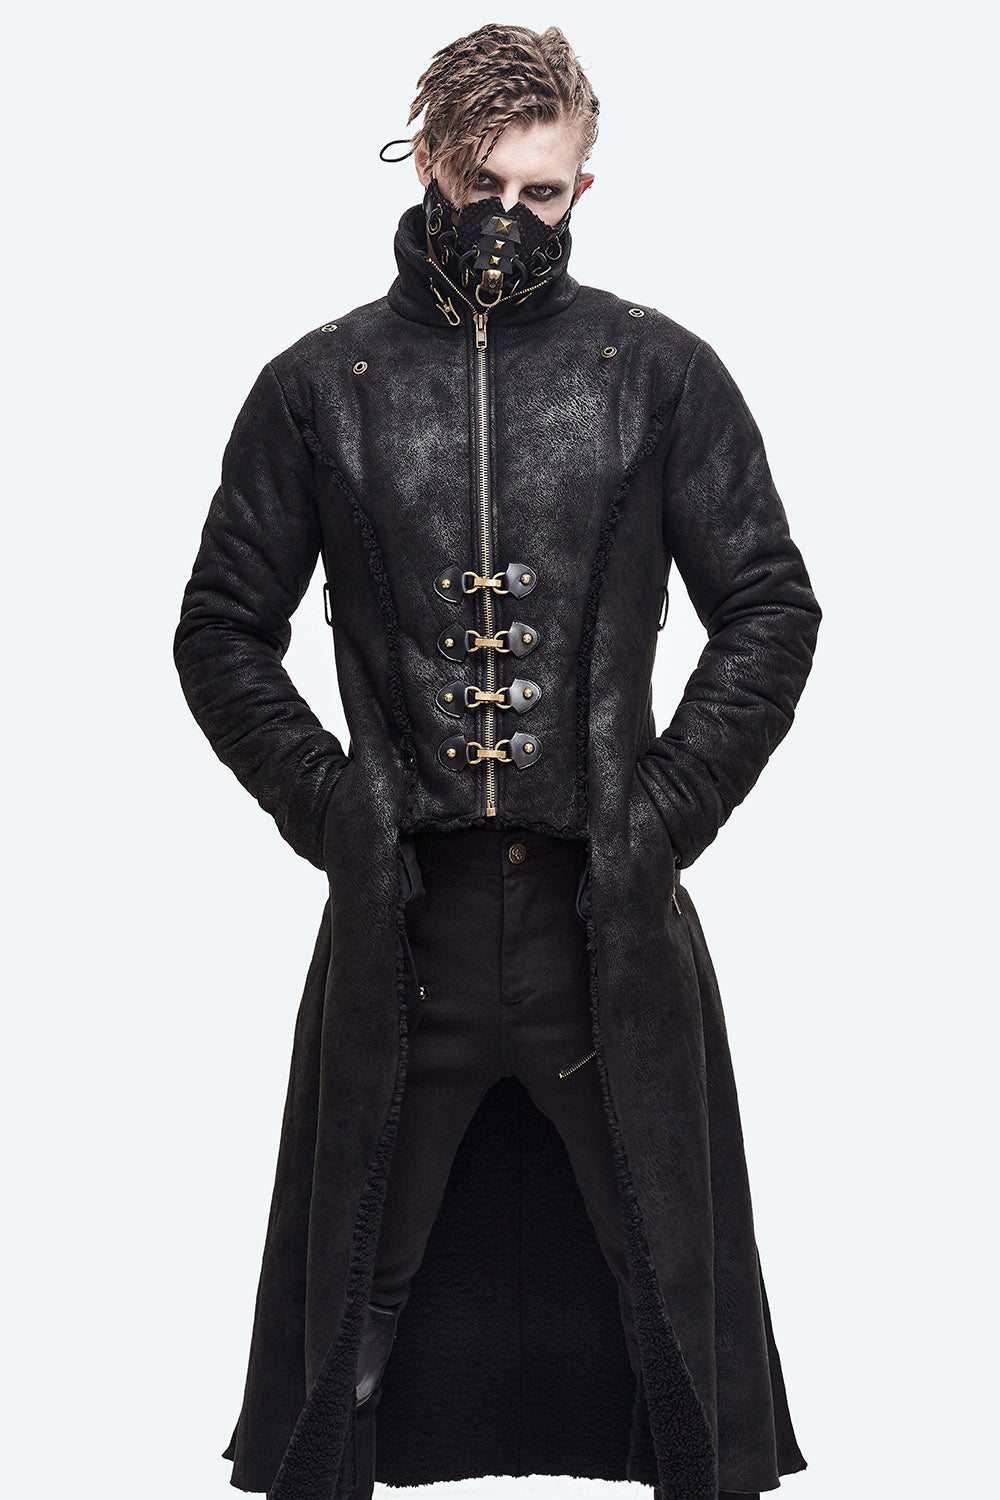 mens gothic winter jacket